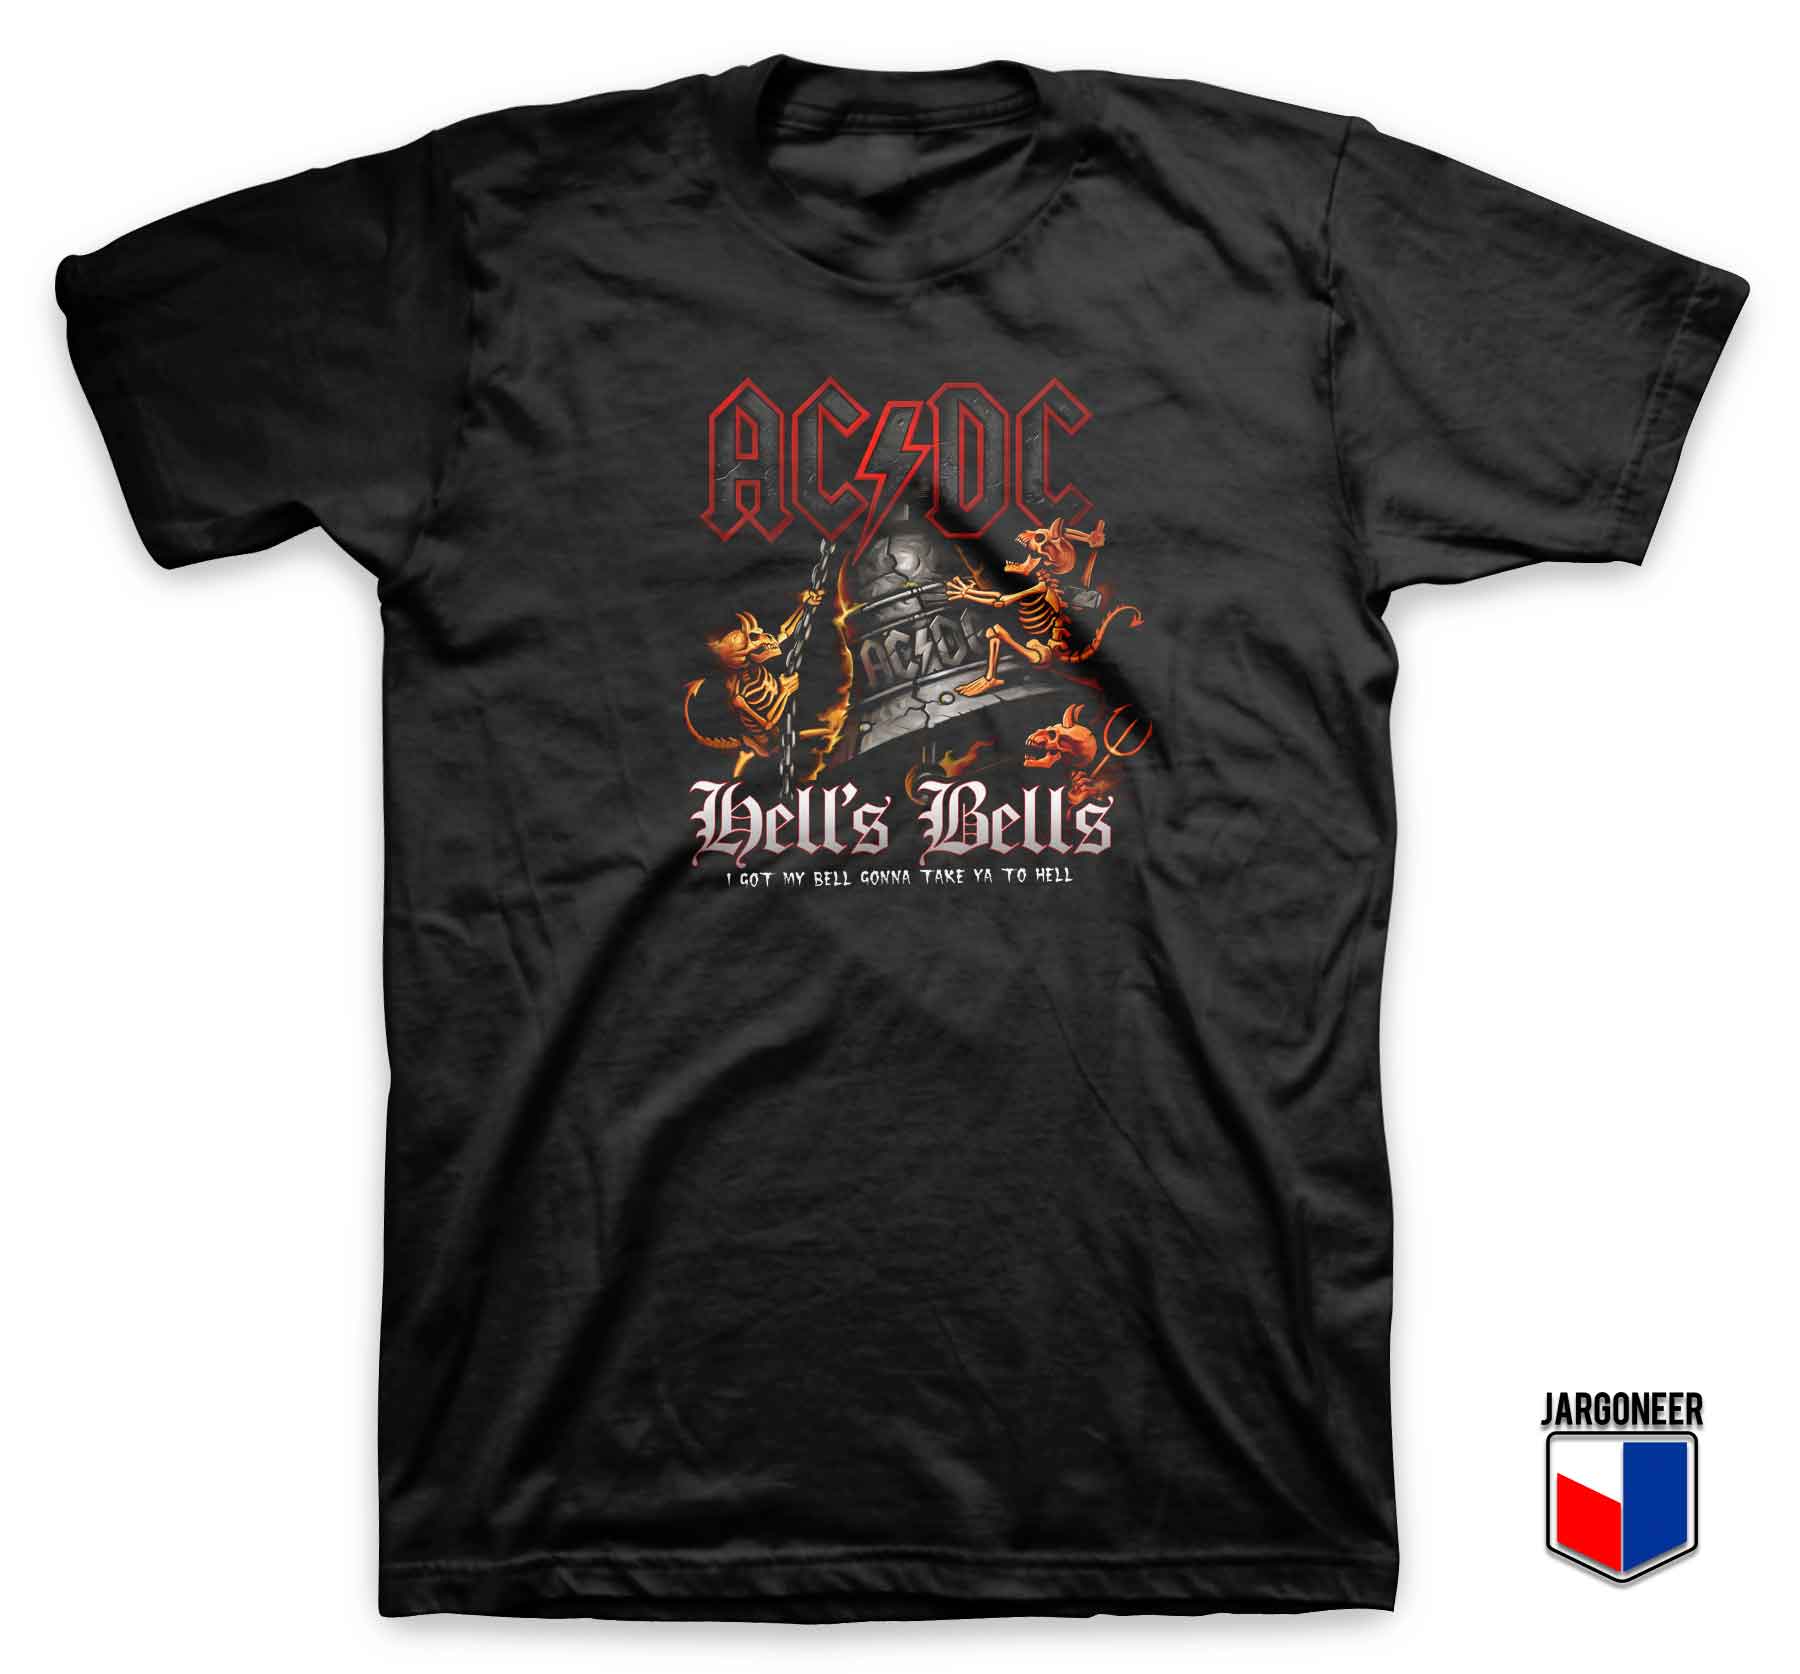 ACDC Hells Bells - Shop Unique Graphic Cool Shirt Designs